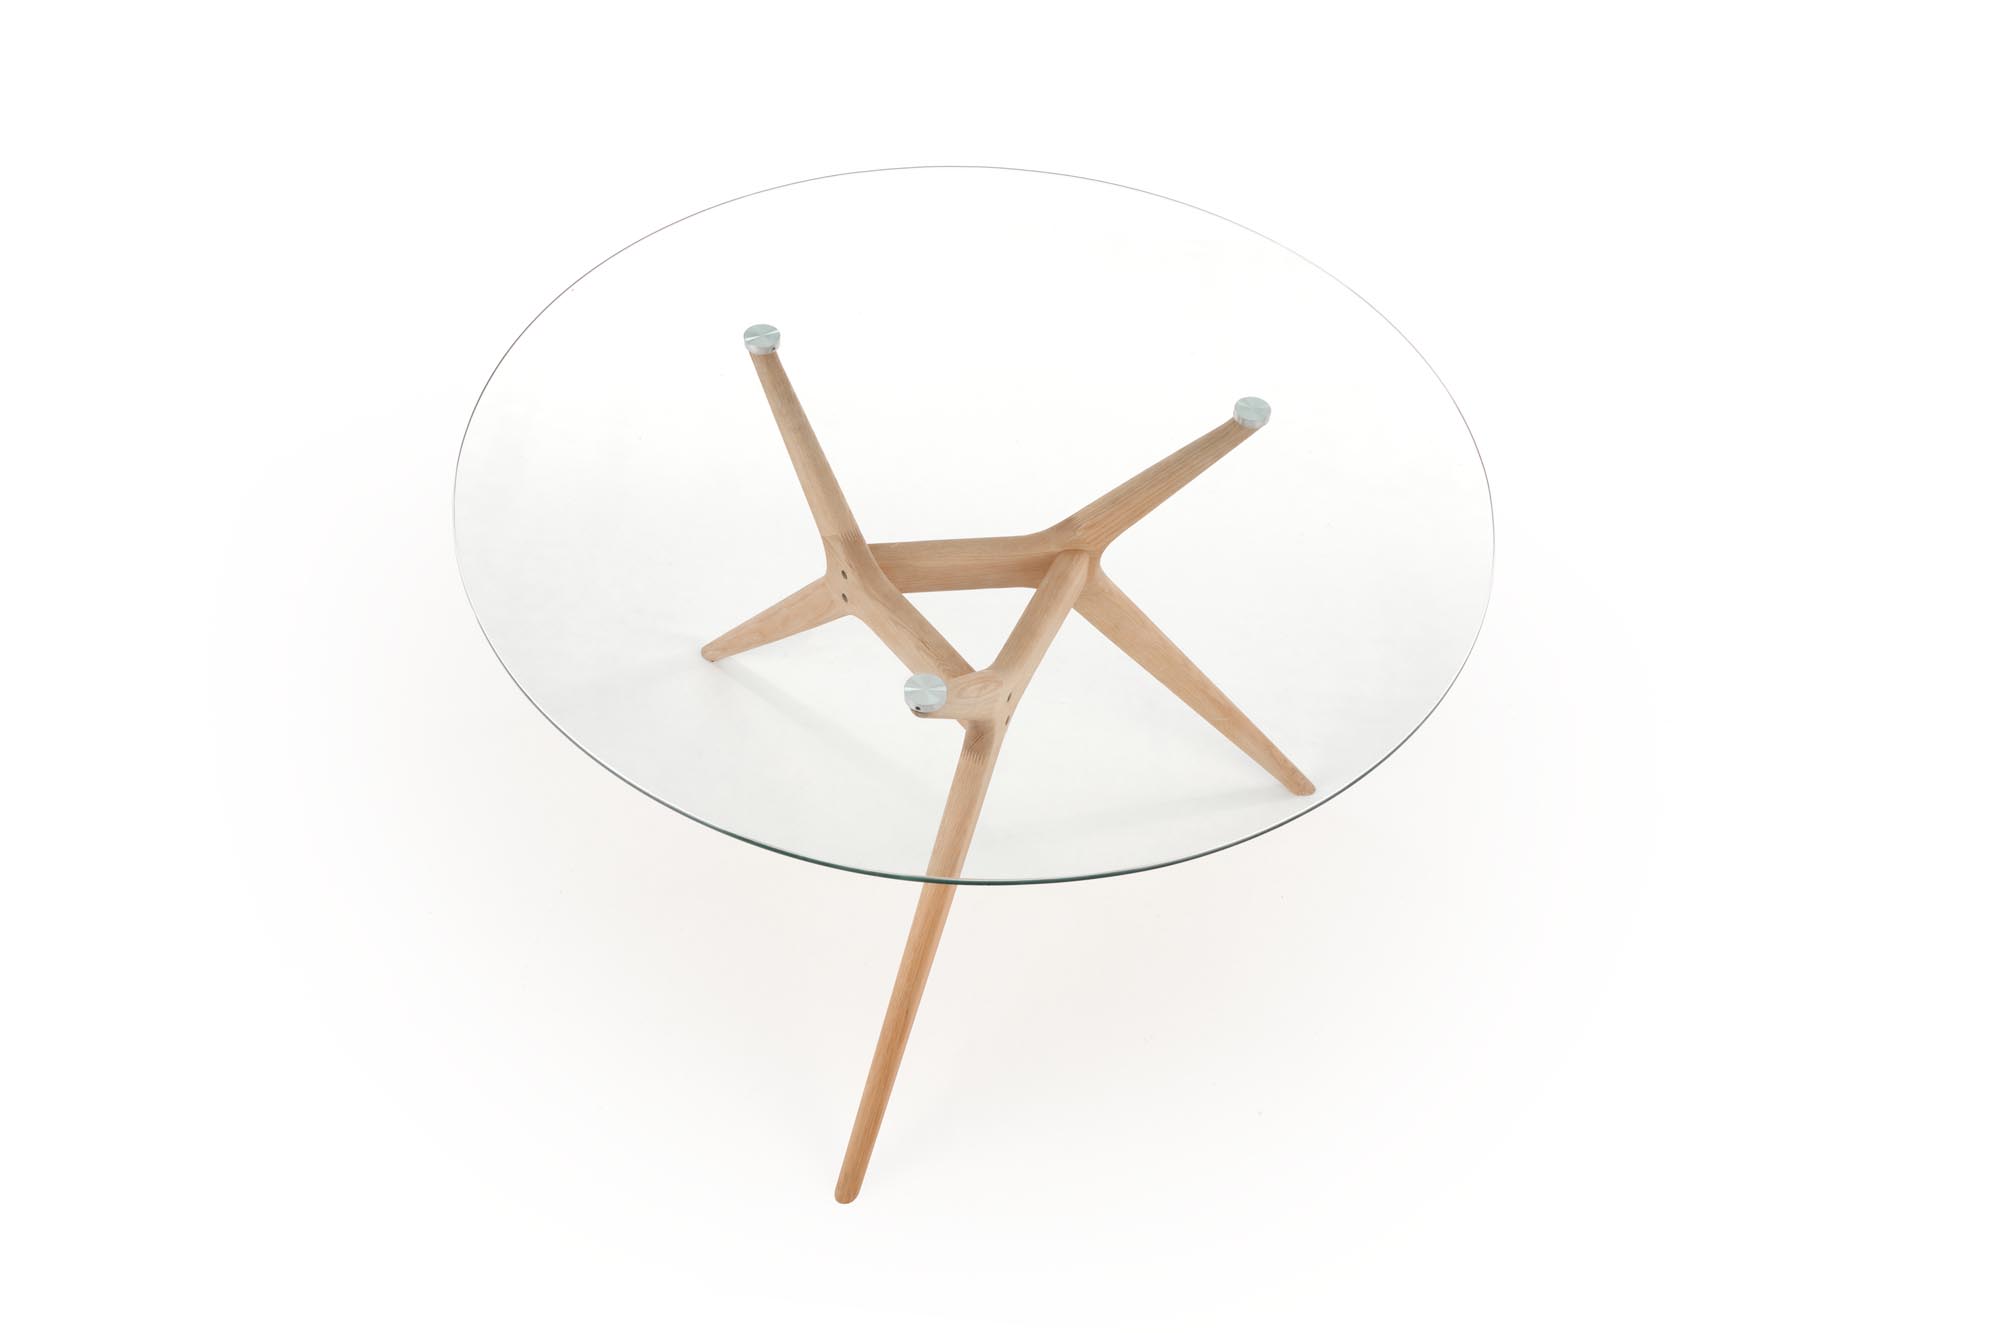 Masă ASHMORE Top - transparent, picior - natural ashmore stůl Deska - transparentní, noha - přírodní